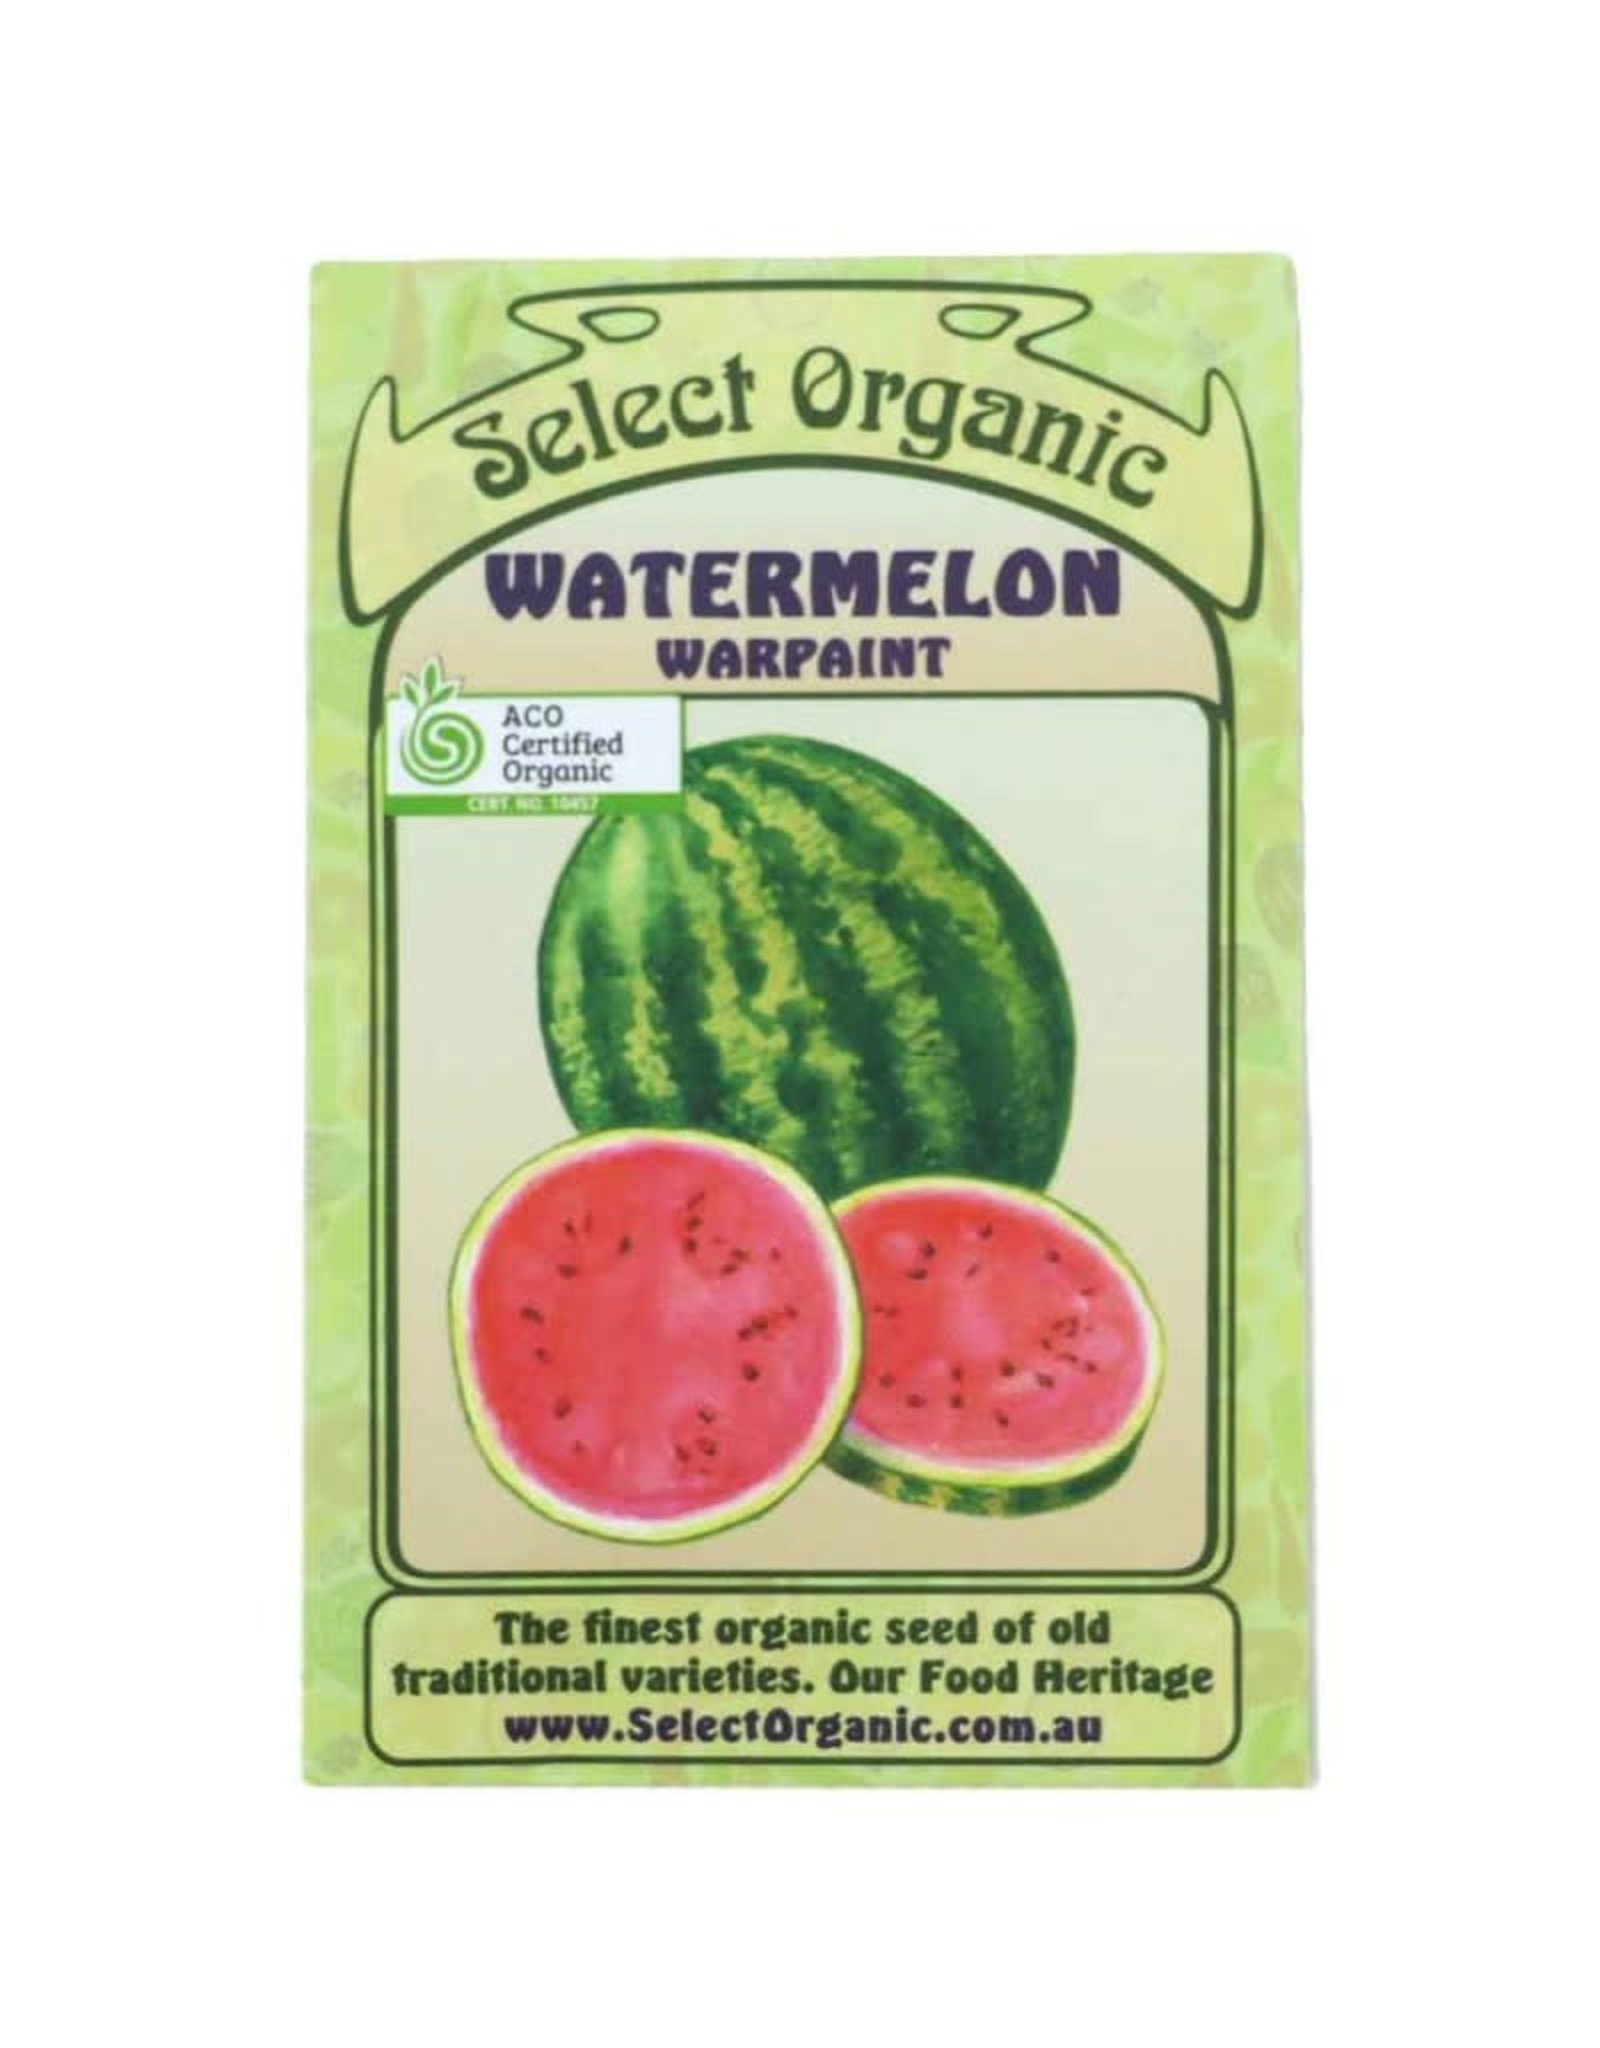 Select Organic Watermelon (Warpaint) Seeds